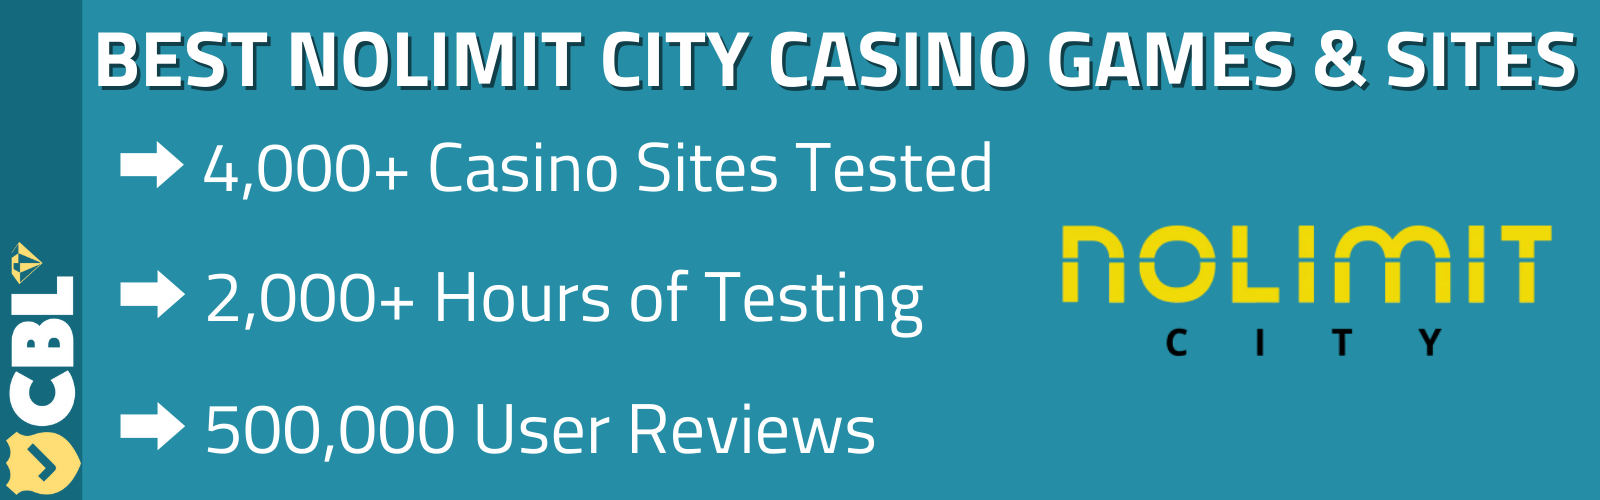 BEST NOLIMIT CITY CASINO GAMES & SITES